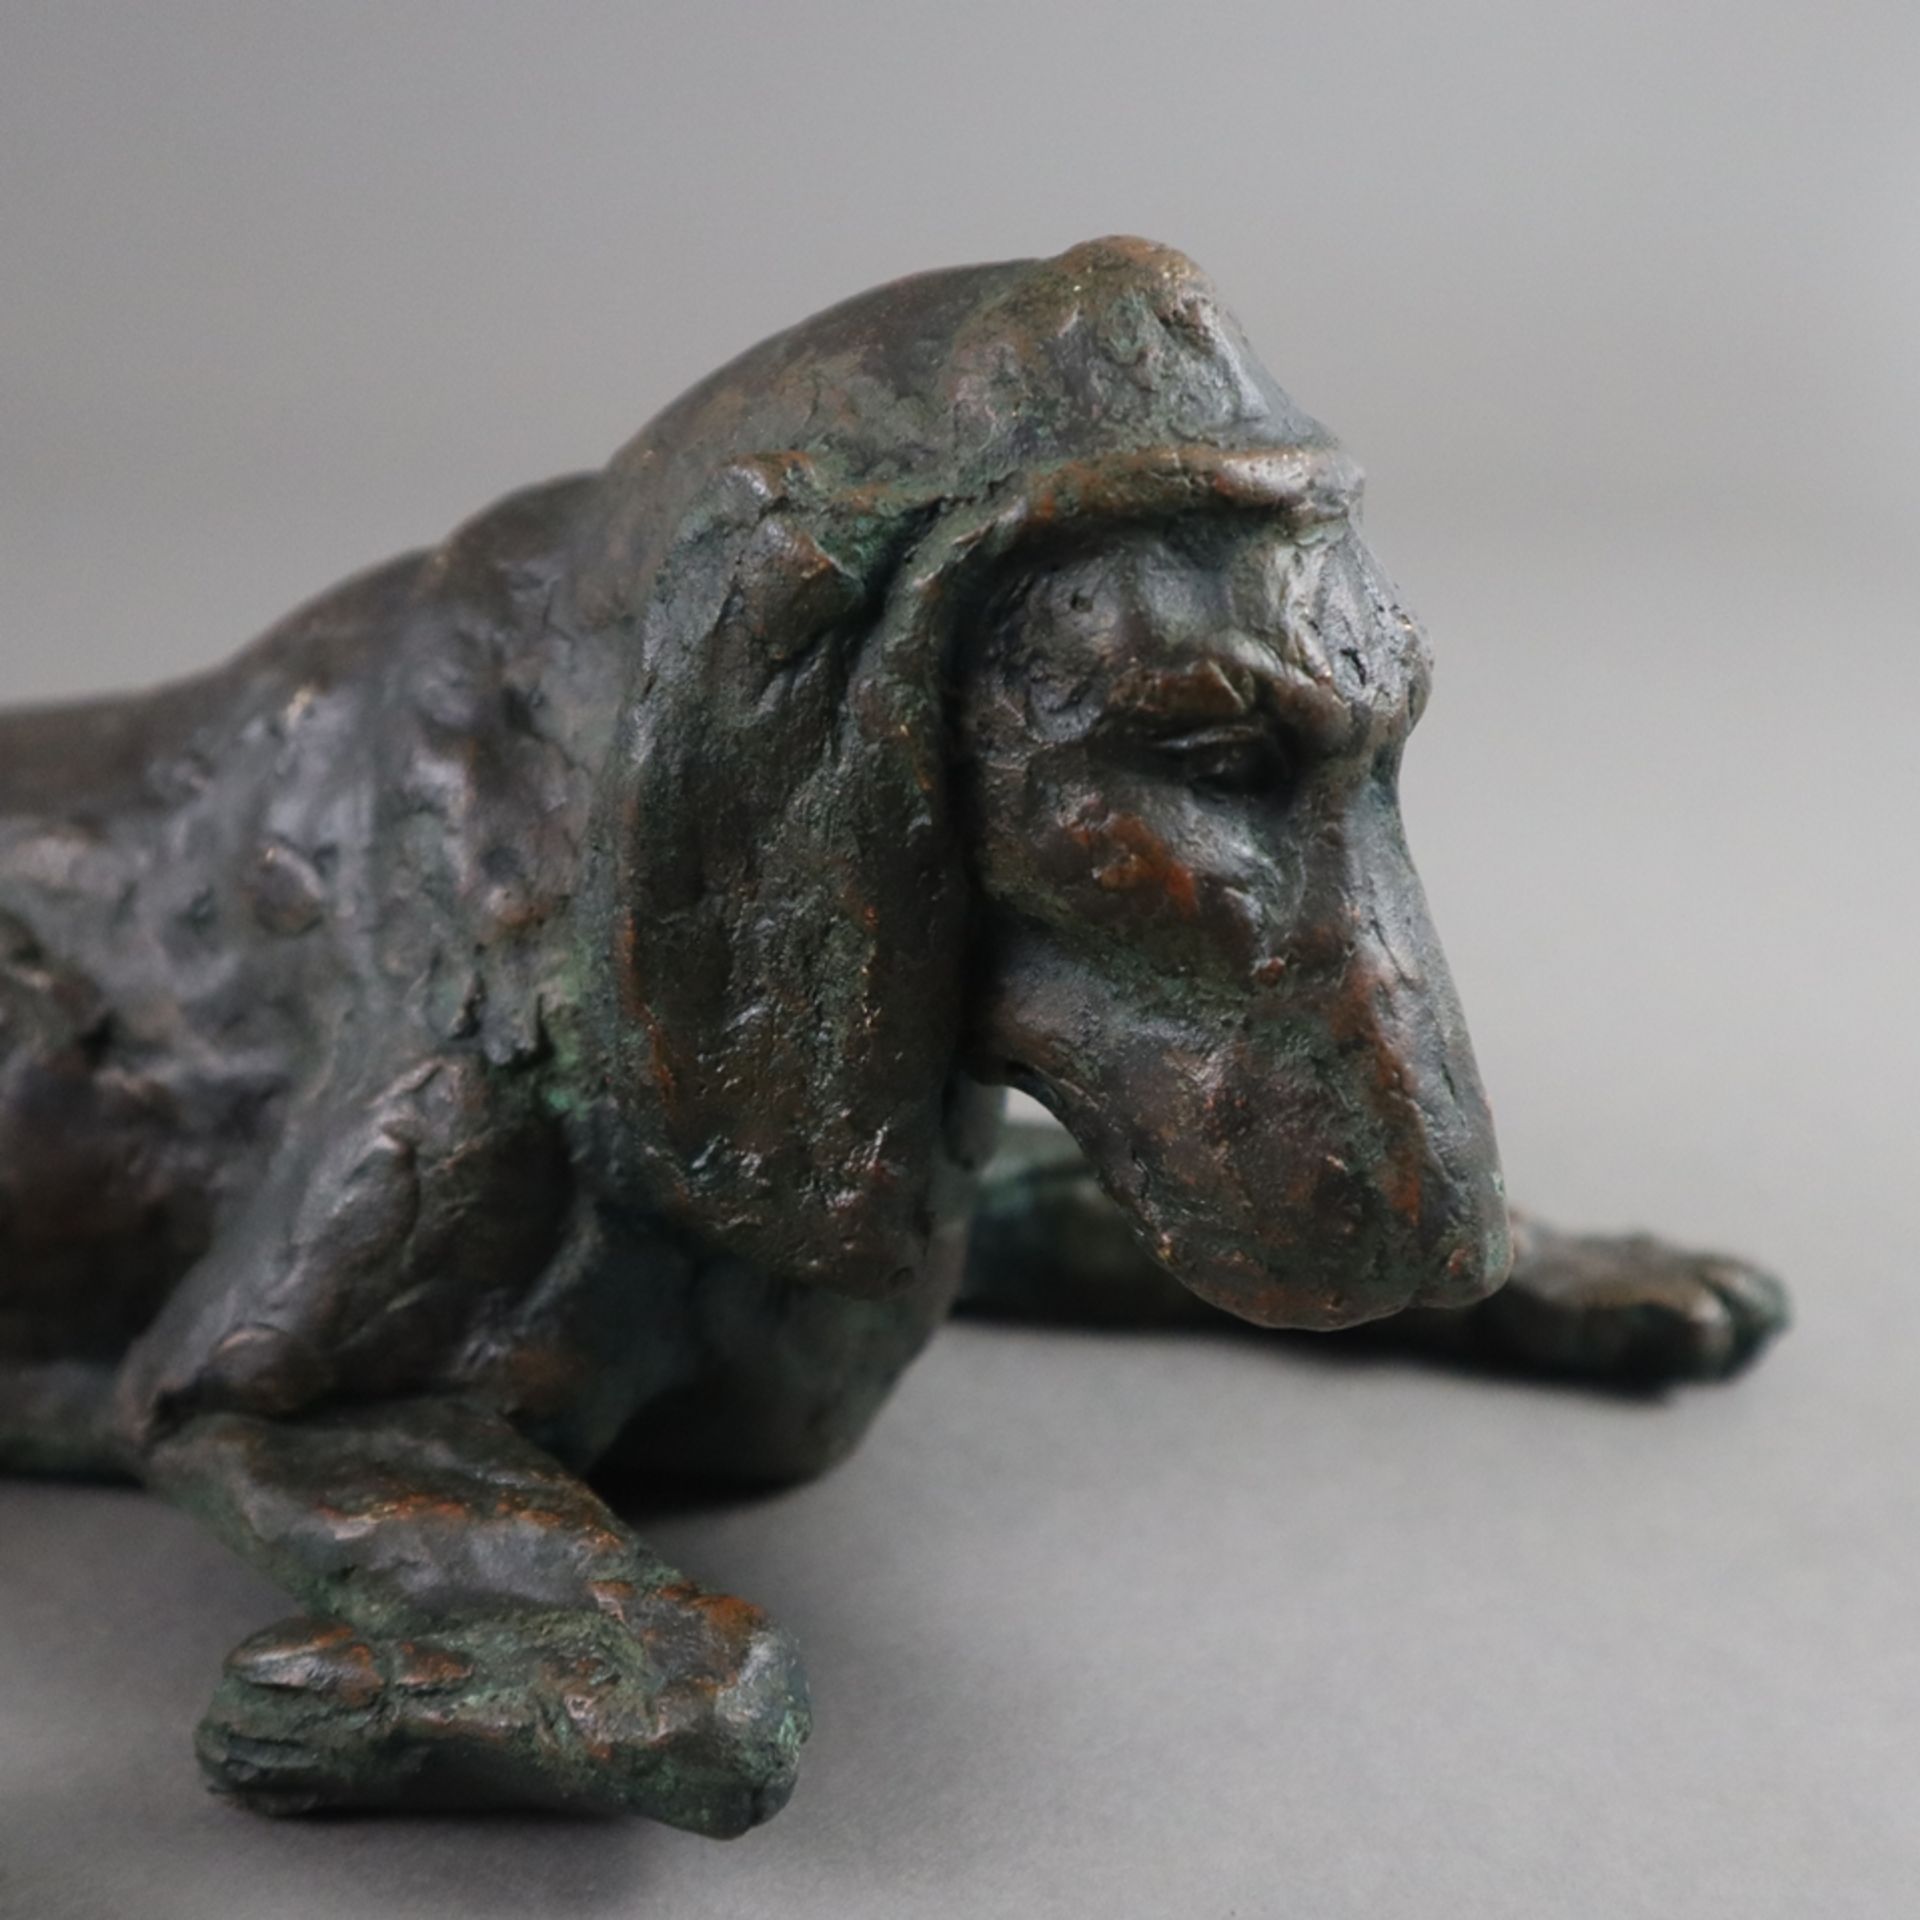 Tierfigur "Liegender Jagdhund" - 1. Hälfte 20. Jh., Bronze, dunkelbraun patiniert, Hohlguss, offene - Bild 2 aus 5